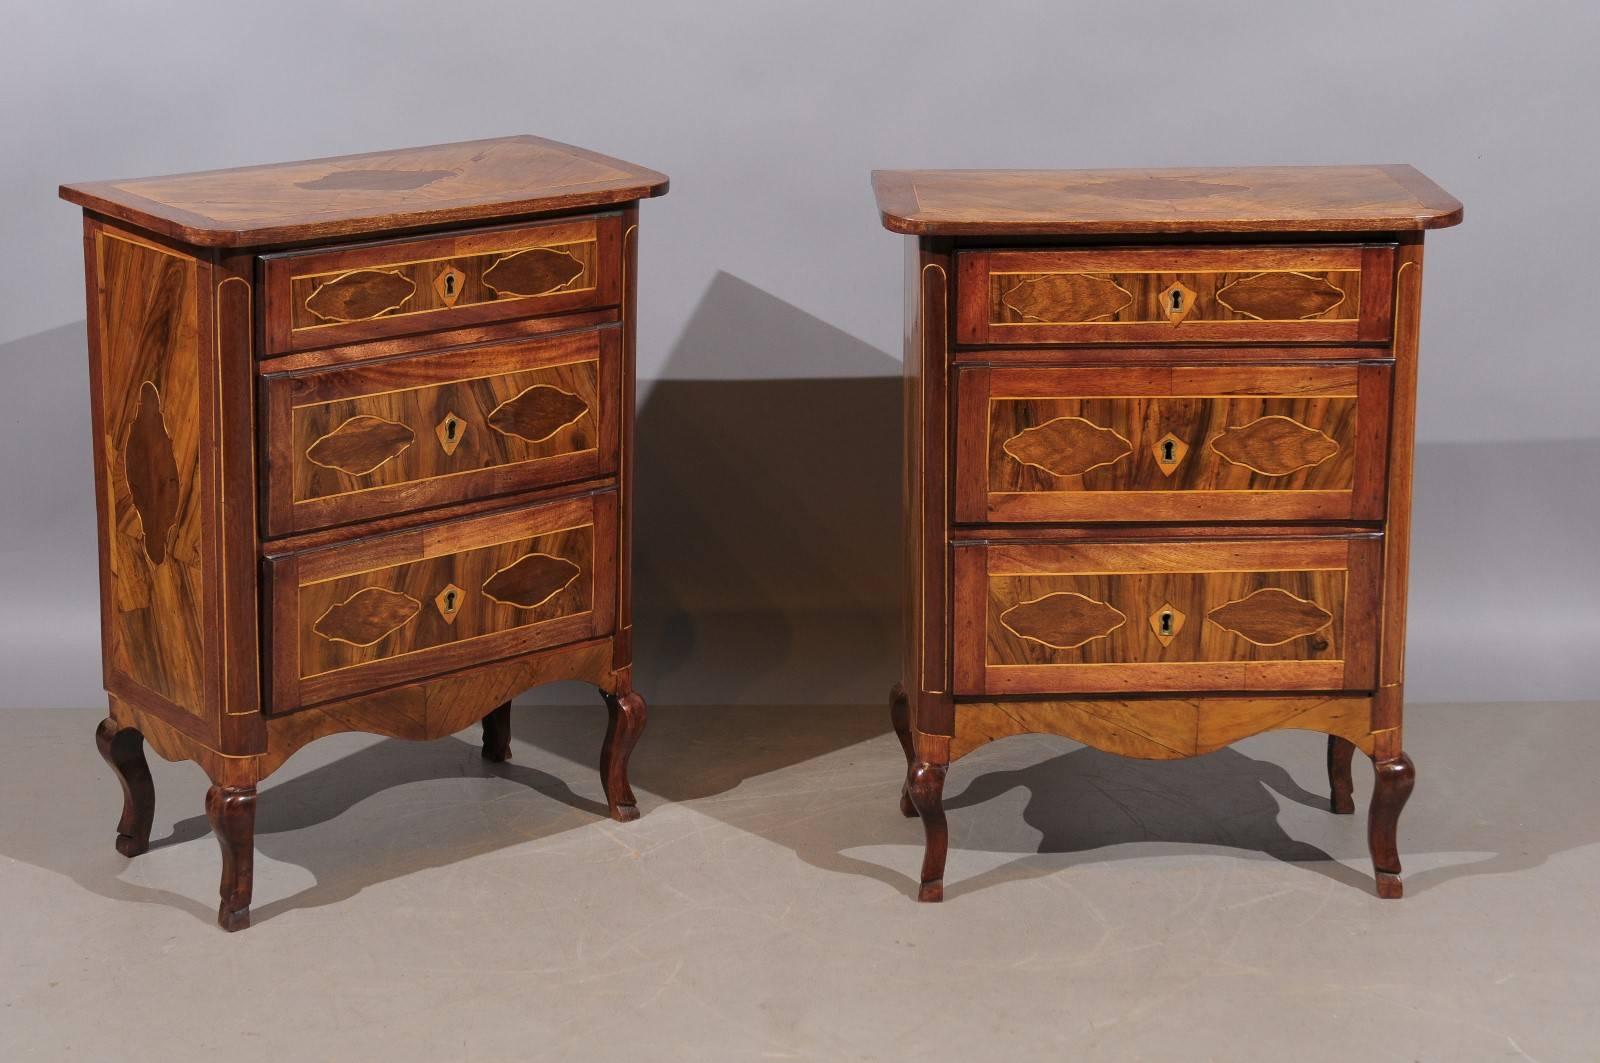 Pair of 19th century Italian inlaid walnut commodinis with three drawers.